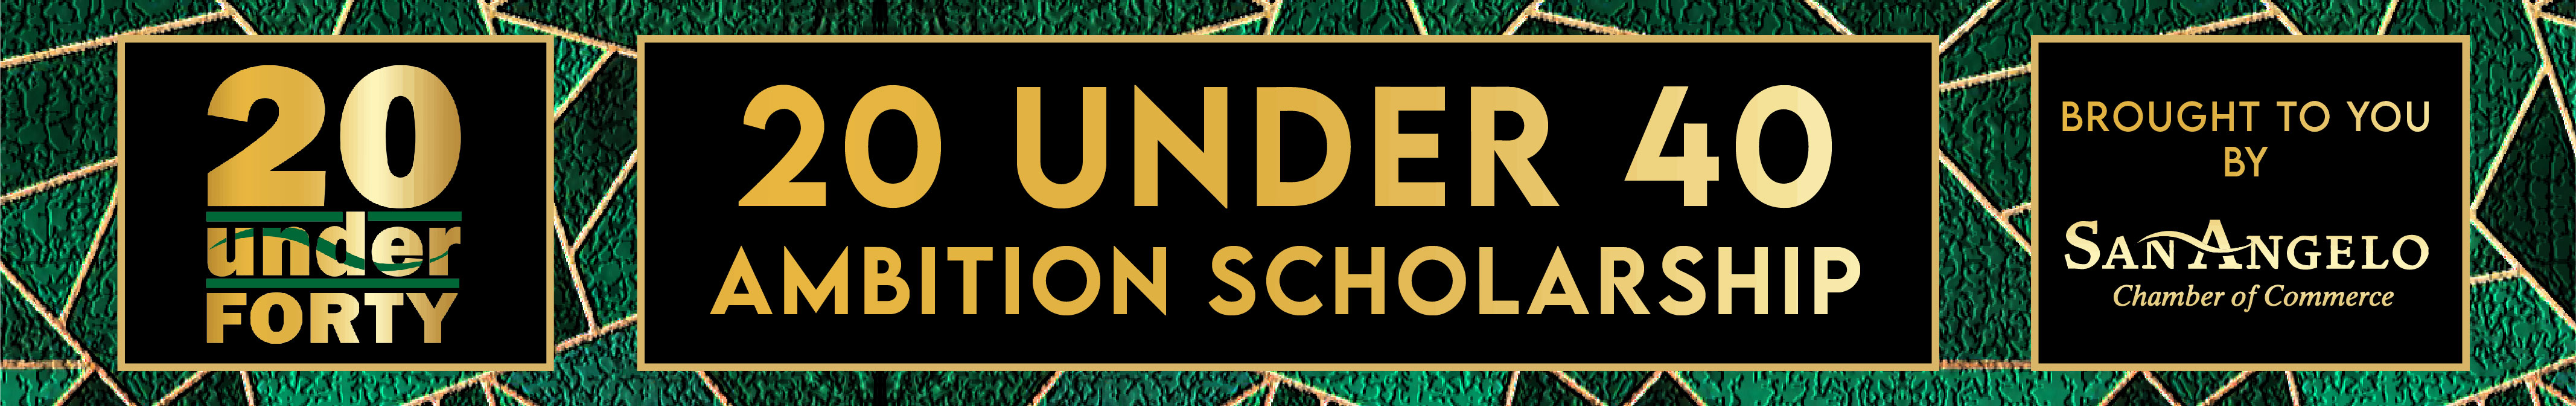 20 Under 40 Ambition Scholarship Web Banner-01